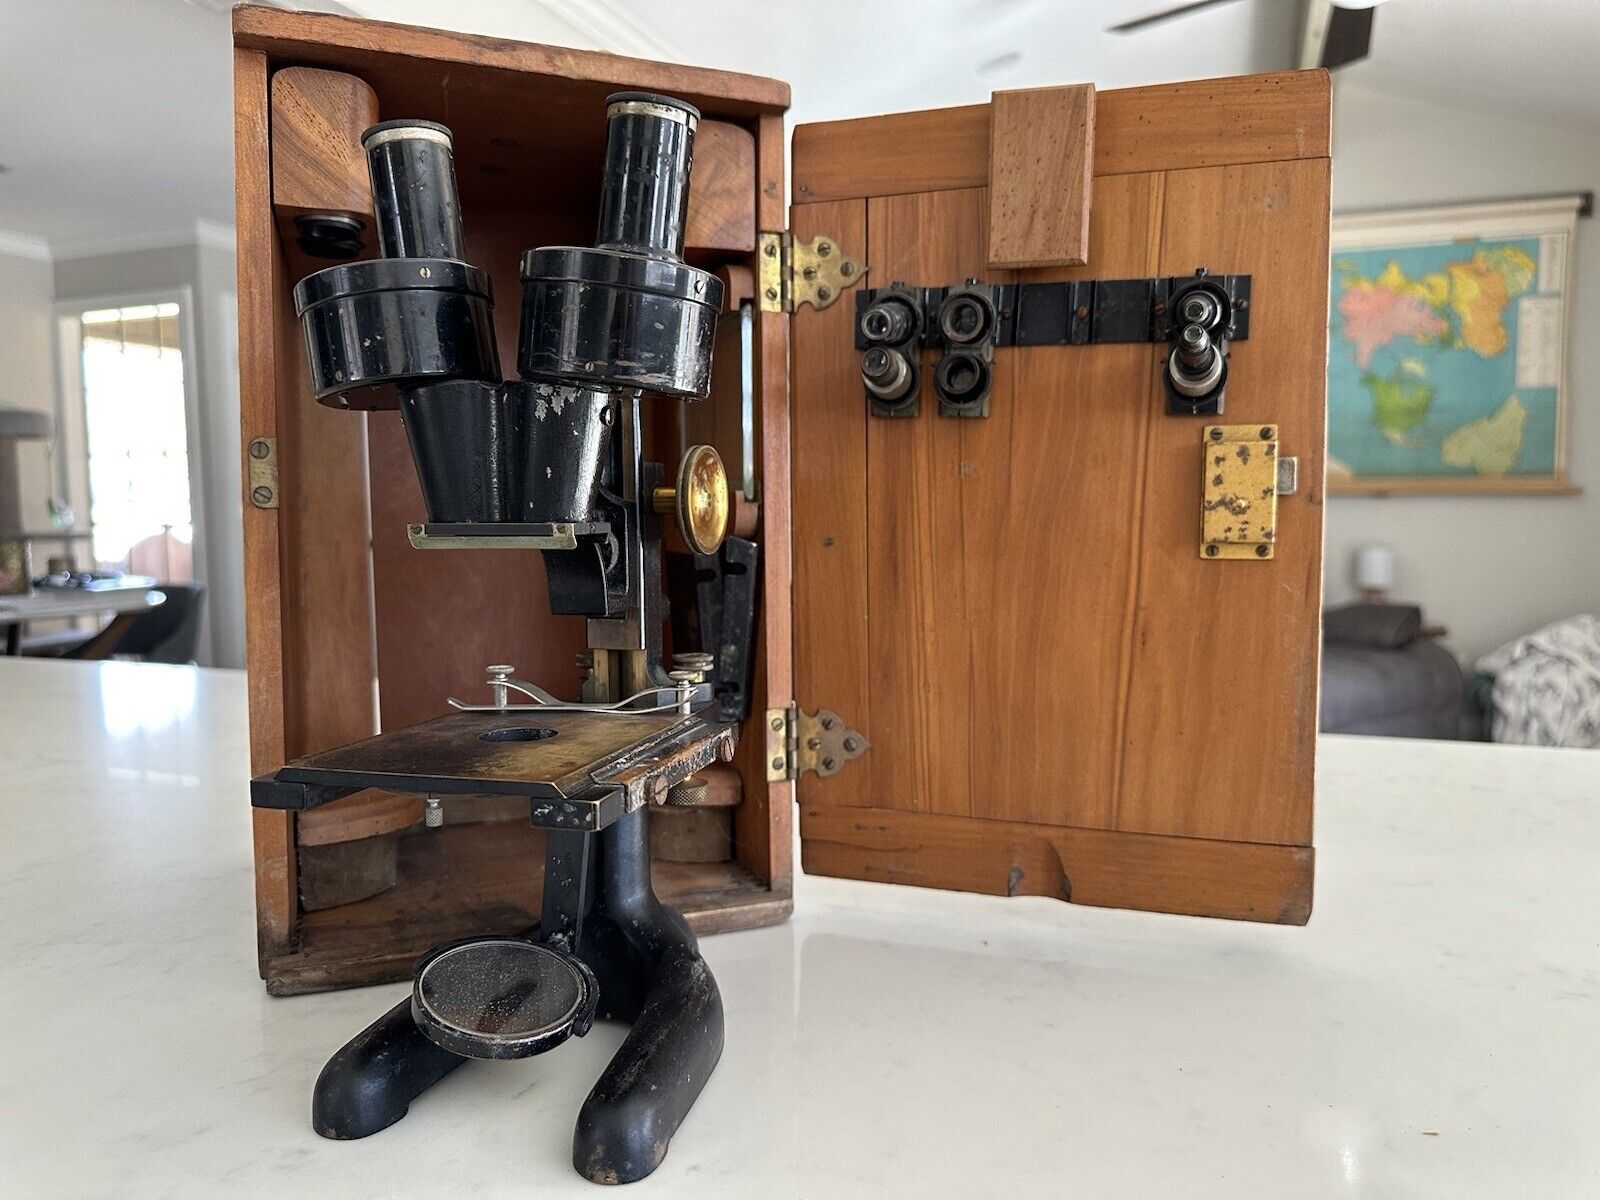 1921 Bausch & Lomb Antique Micros - Original Box, Key, Optics - #151051 - Clean